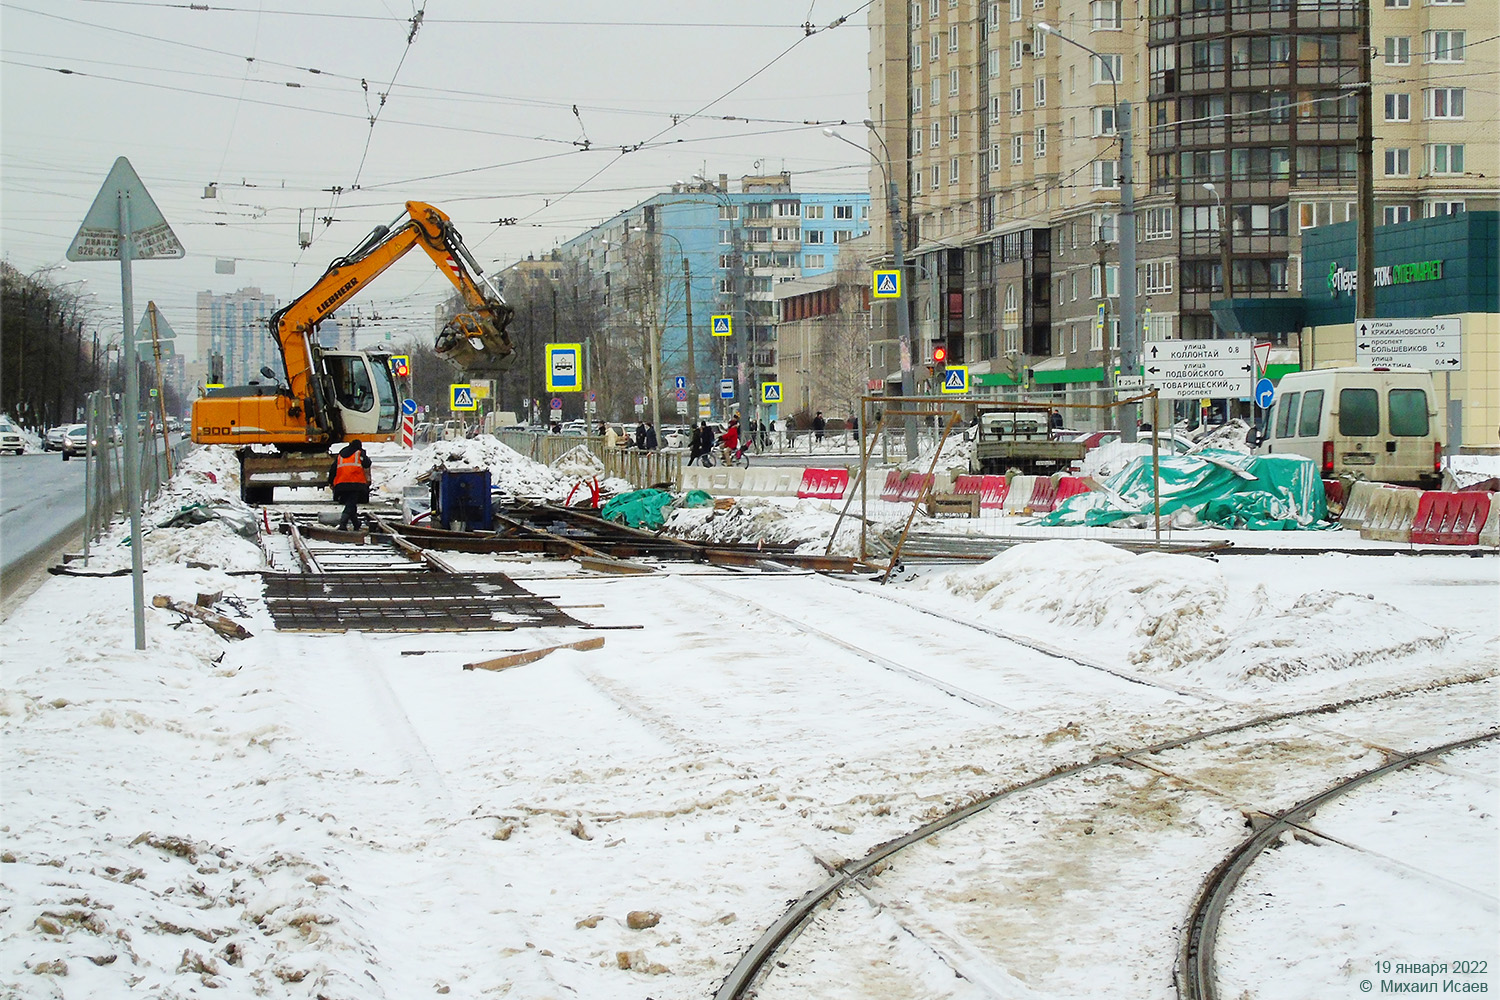 Sankt Petersburg — Track repairs